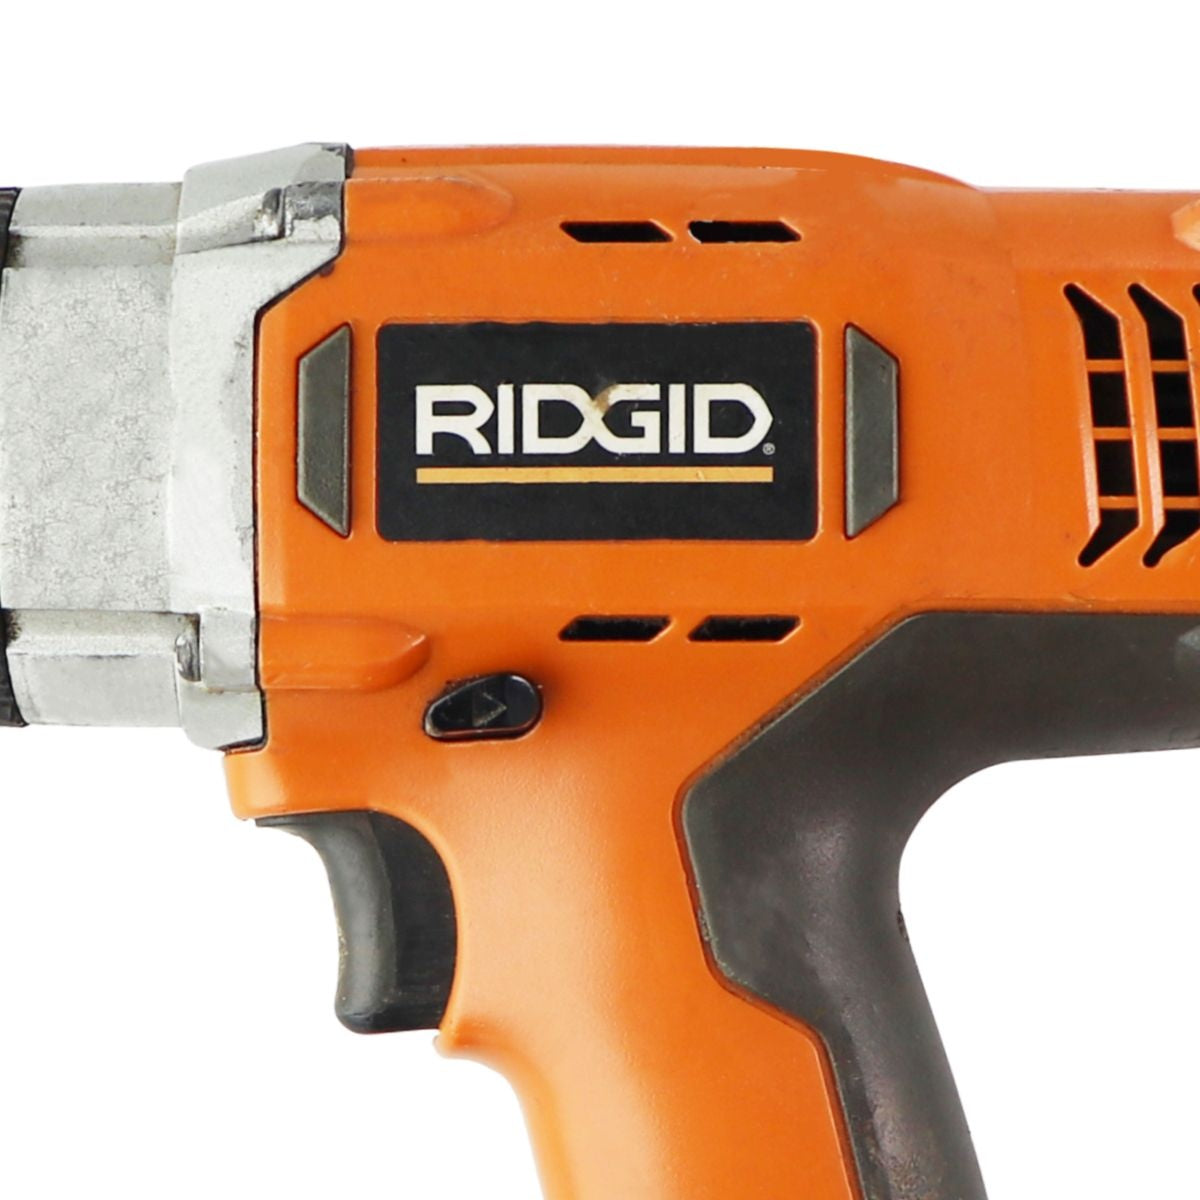 RIDGID 24v XLI Lithium Battery Powered Hammer Drill (R851150) - Orange Home Improvement - Other Home Improvement RIDGID    - Simple Cell Bulk Wholesale Pricing - USA Seller